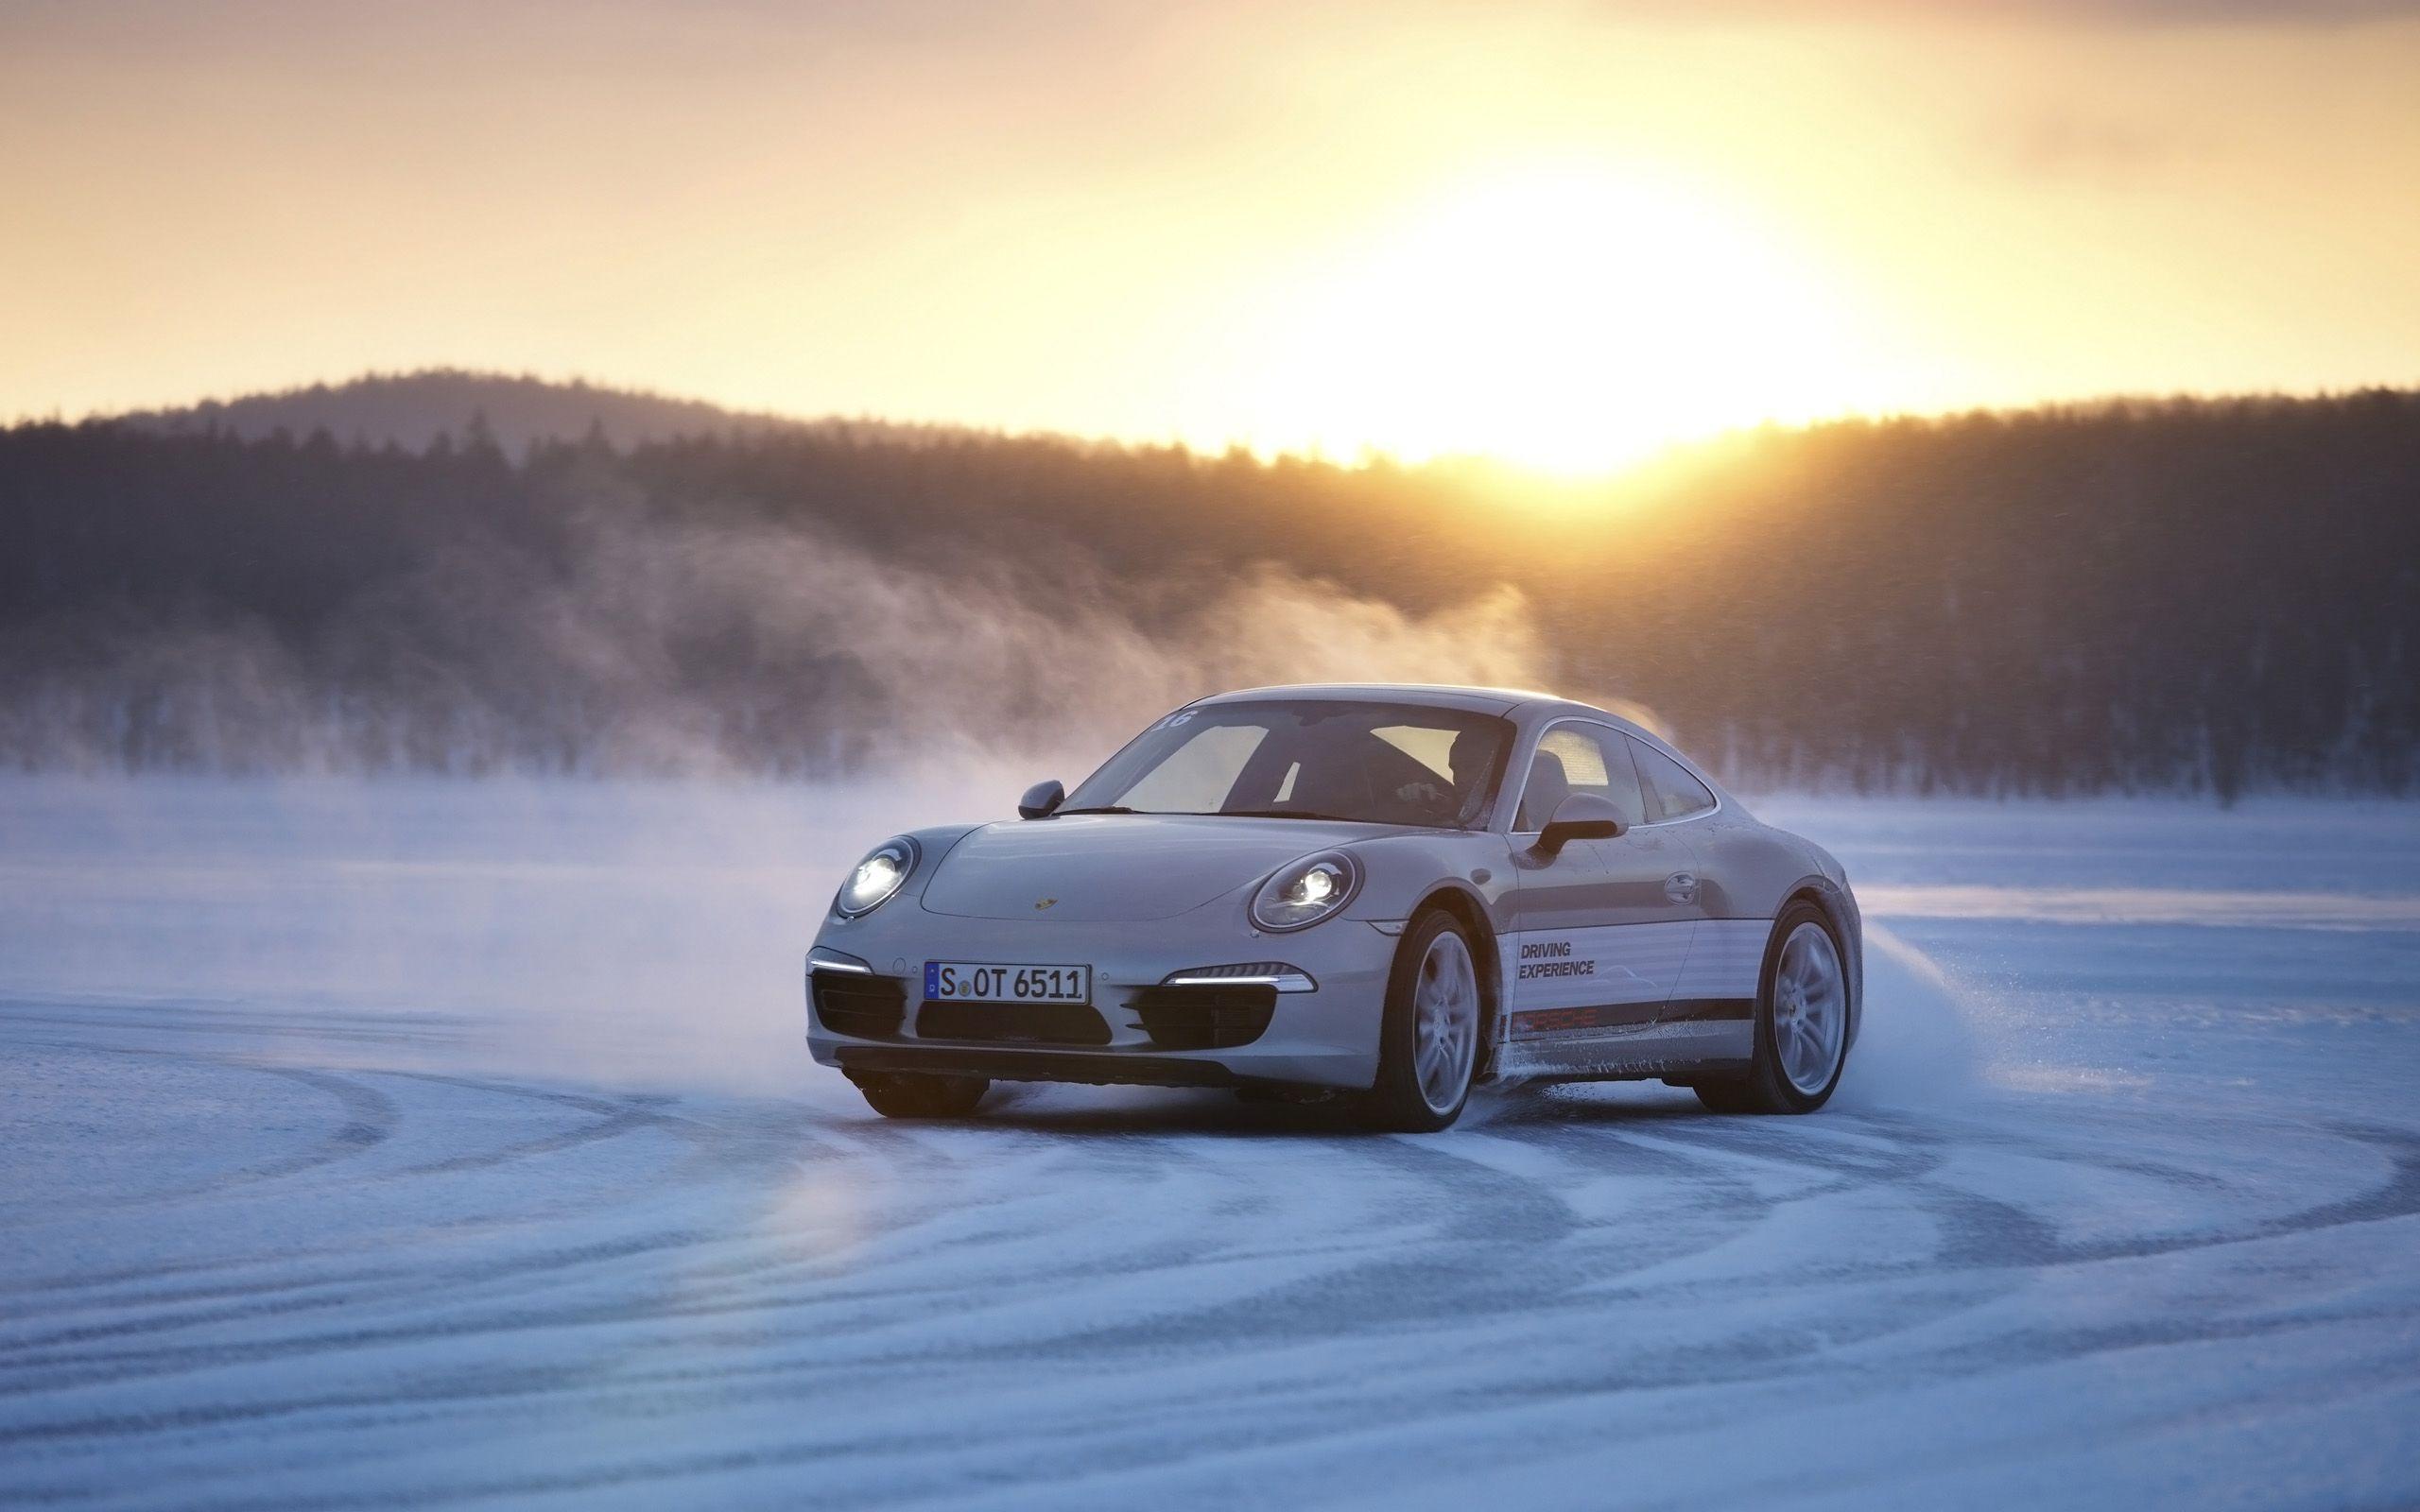 Porsche 911 Snow, HD Cars, 4k Wallpaper, Image, Background